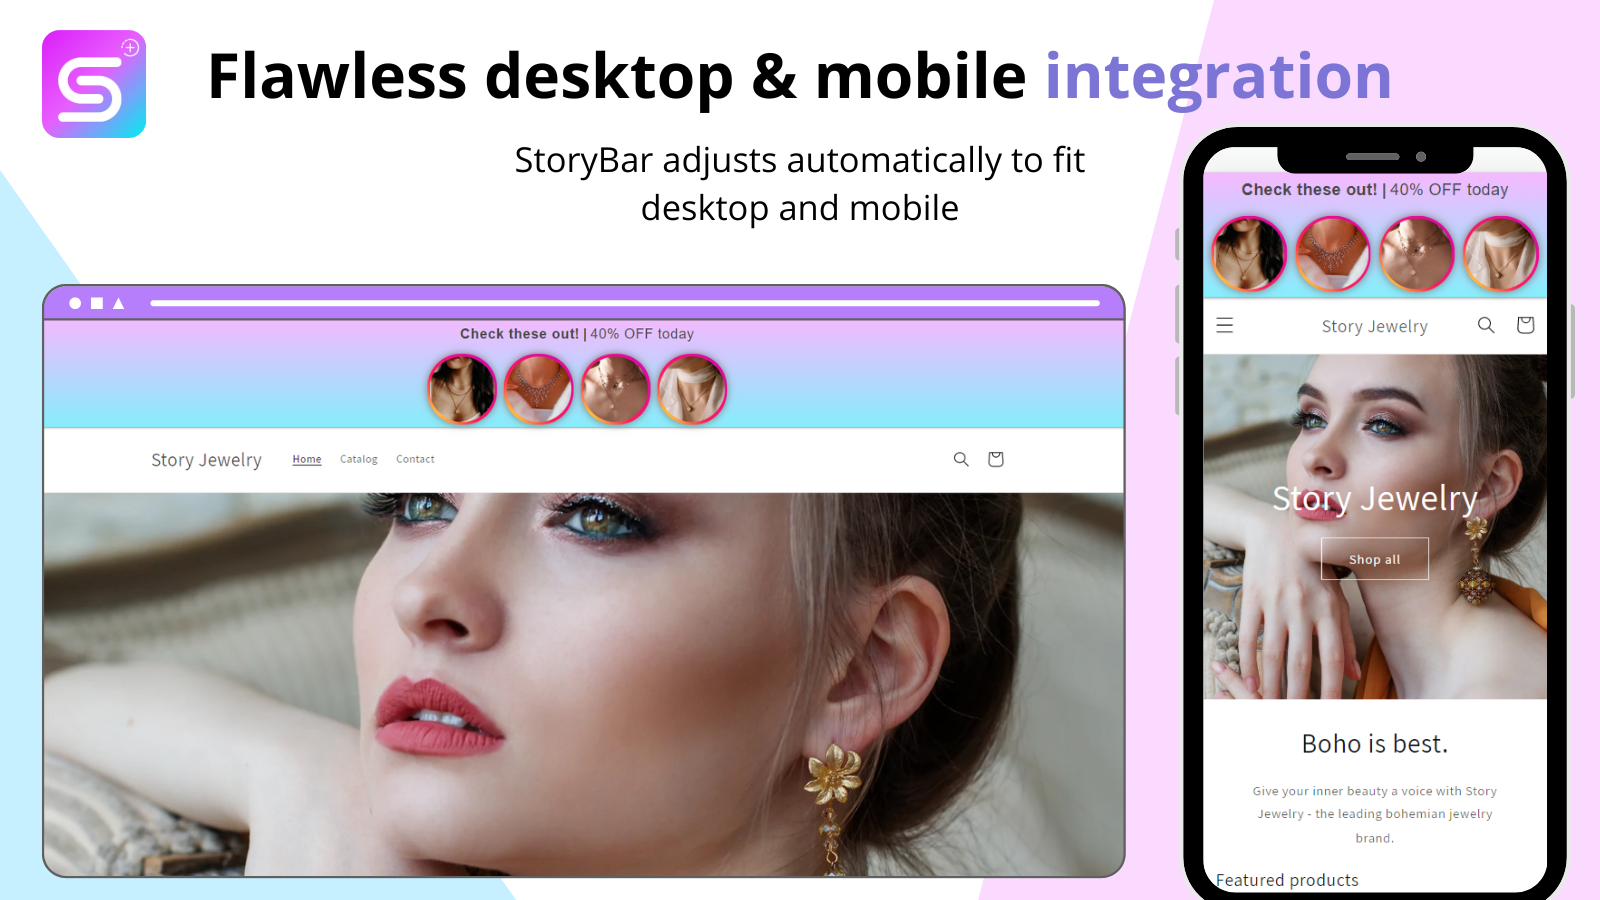 Flawless desktop & mobile integration